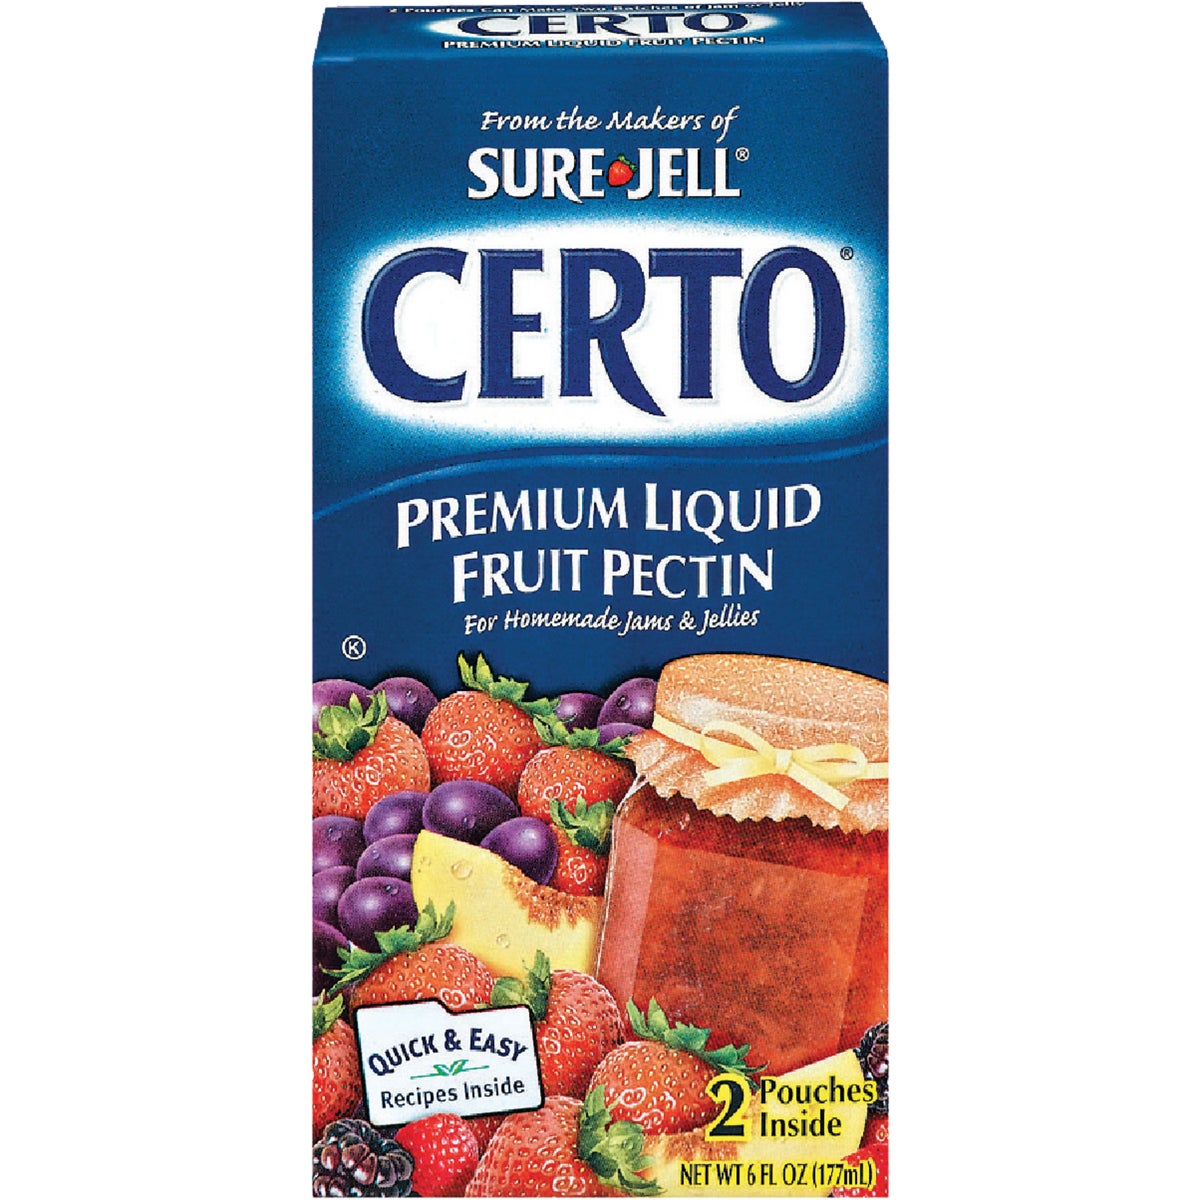 Item 602287, Liquid fruit pectin for homemade jams and jellies.